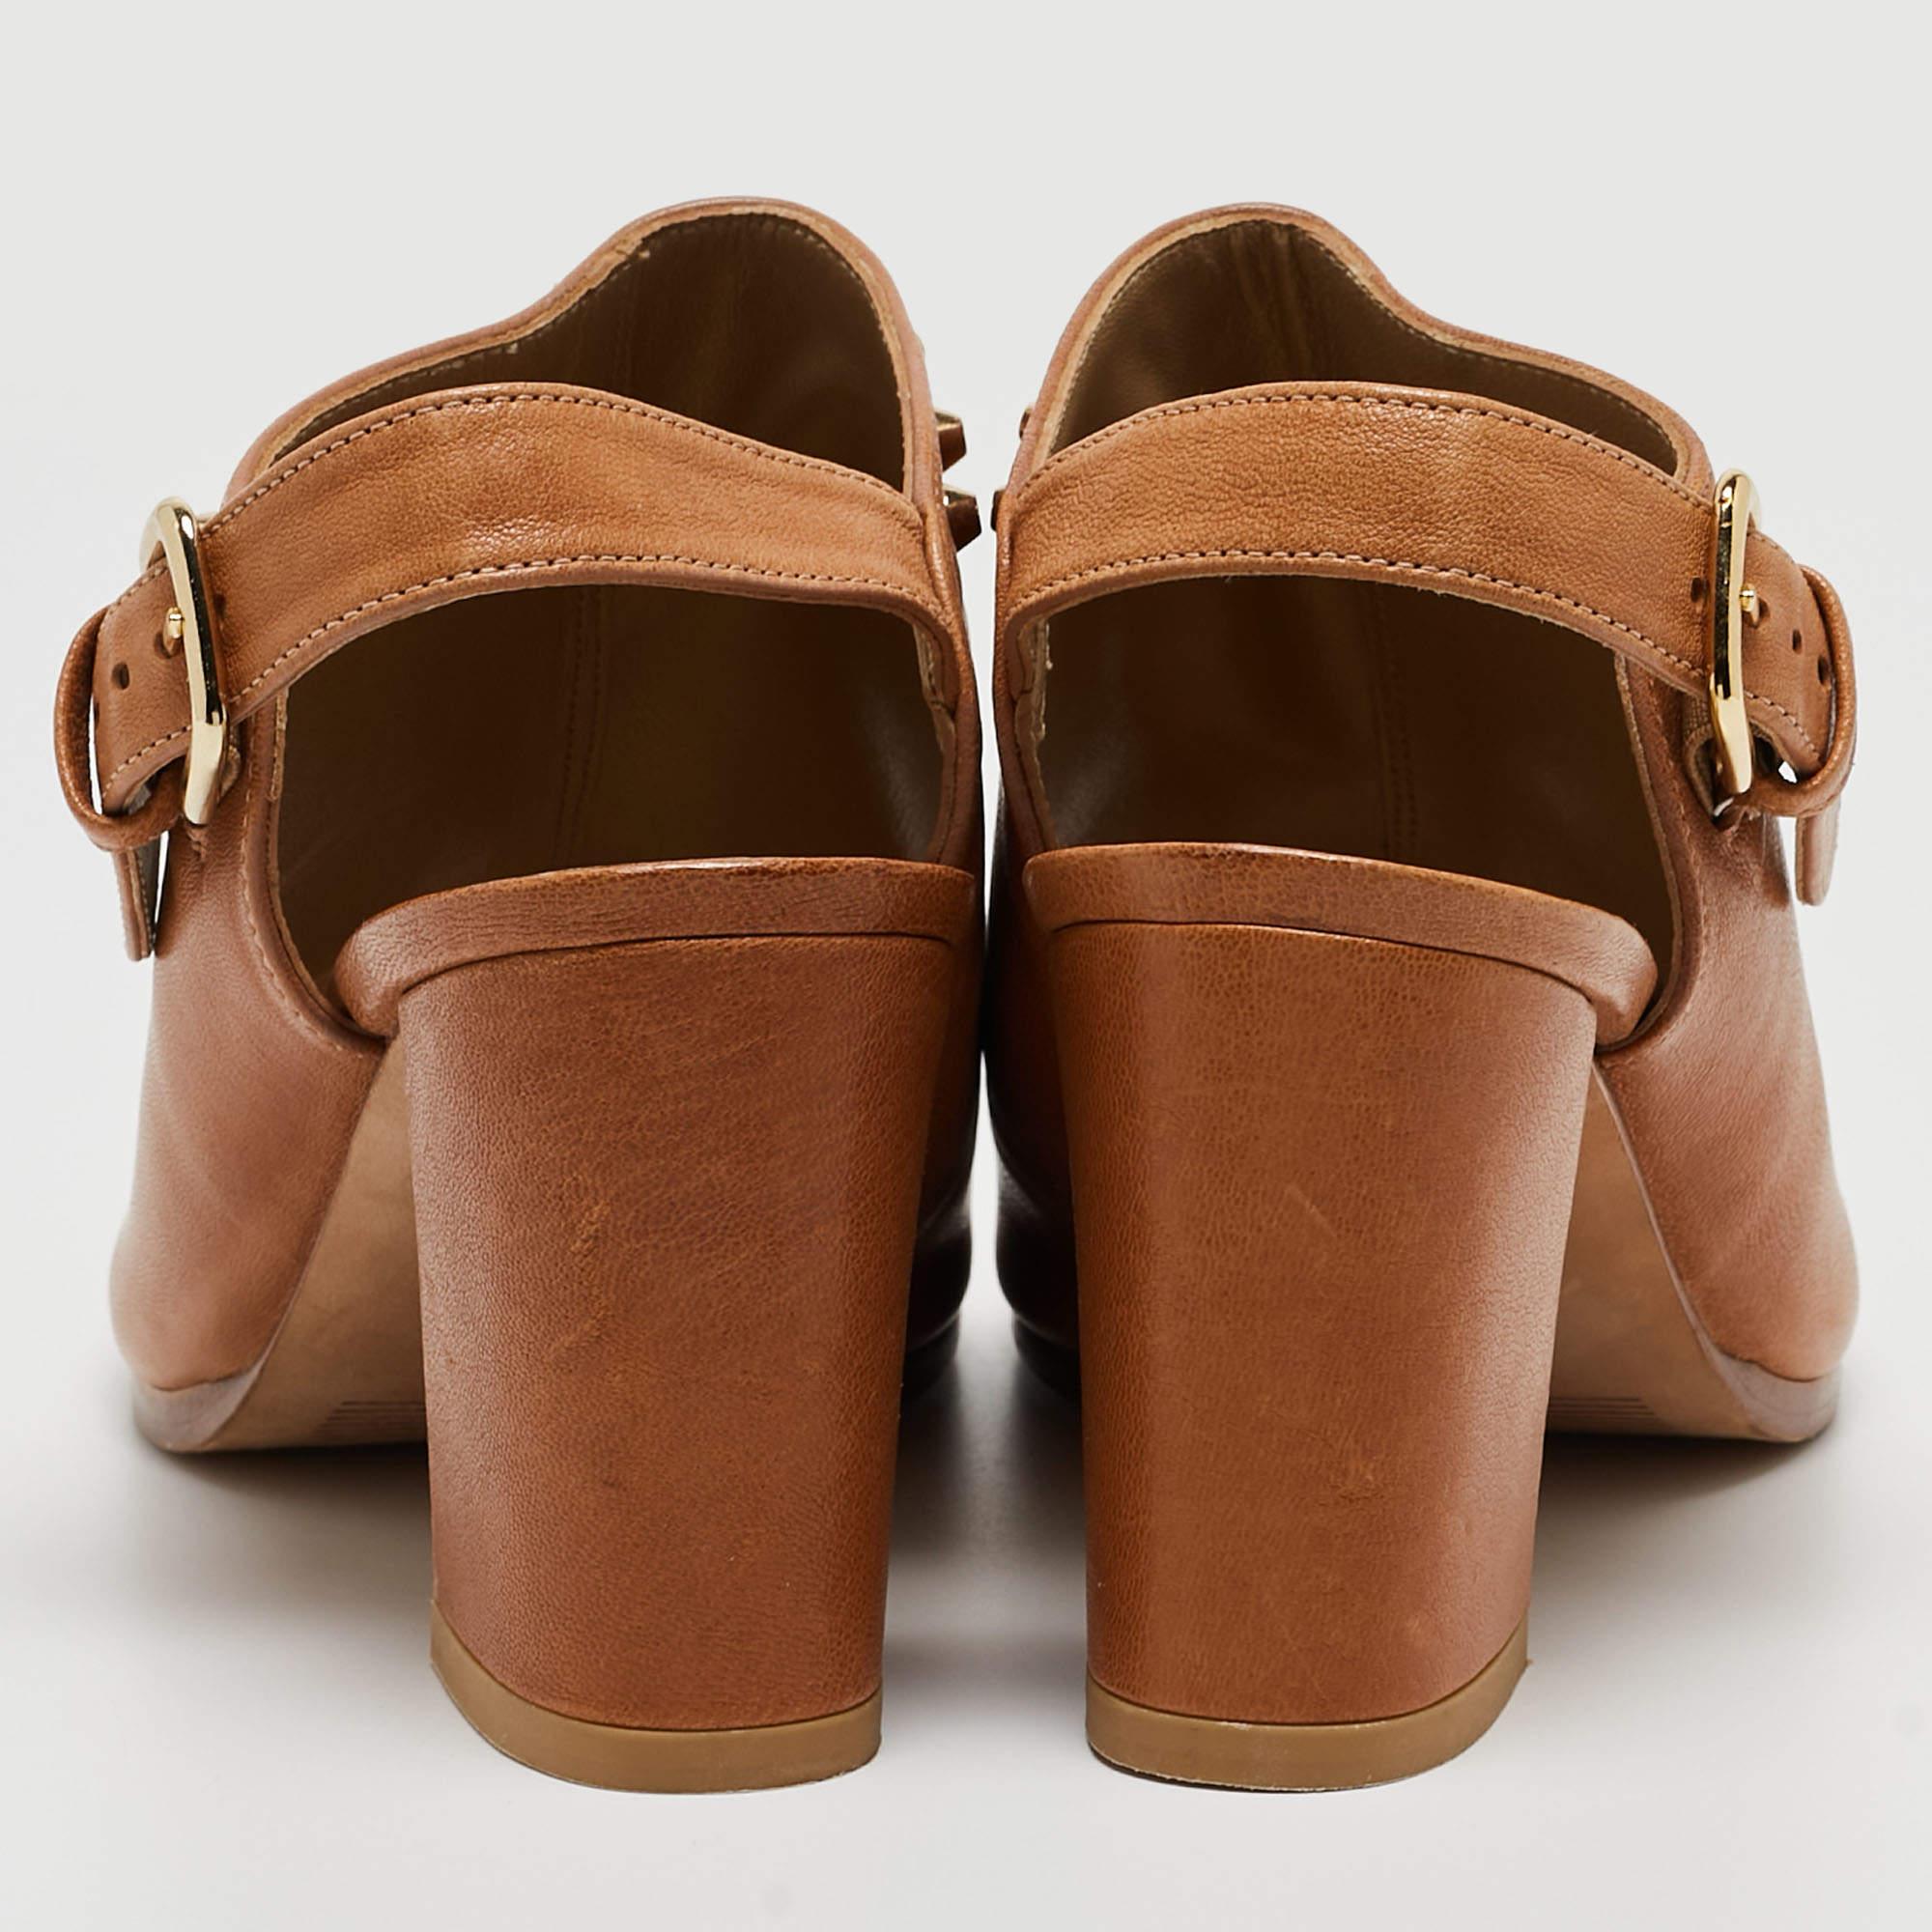 Stuart Weitzman Tan Leather Studded Slingback Sandals Size 36 4